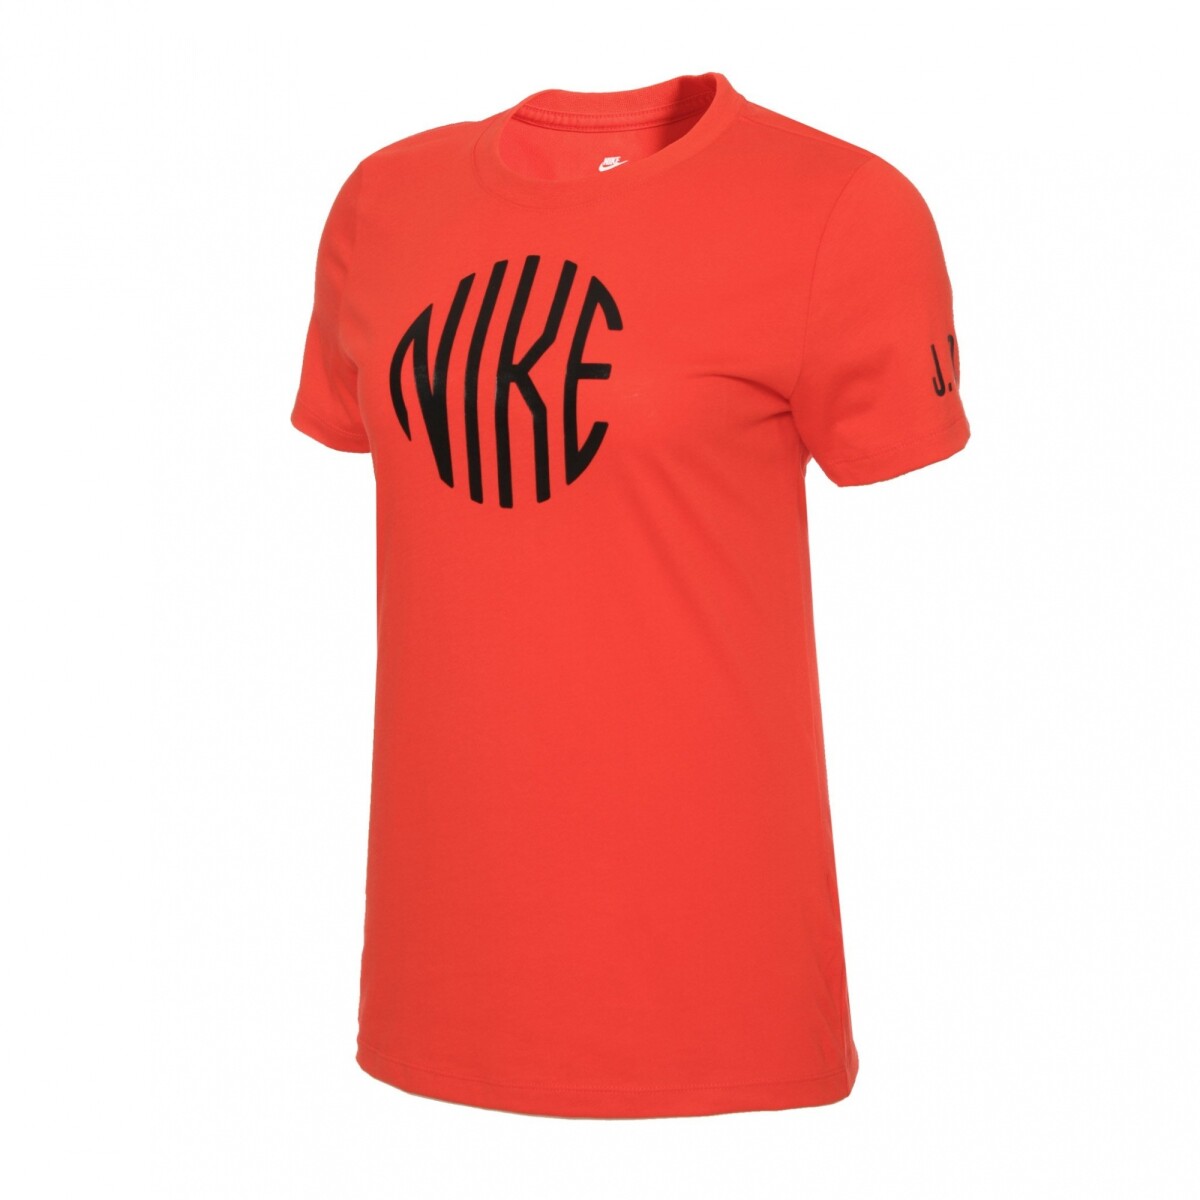 Remera Nike Moda Dama Tee Icon Clash CHILE - S/C 